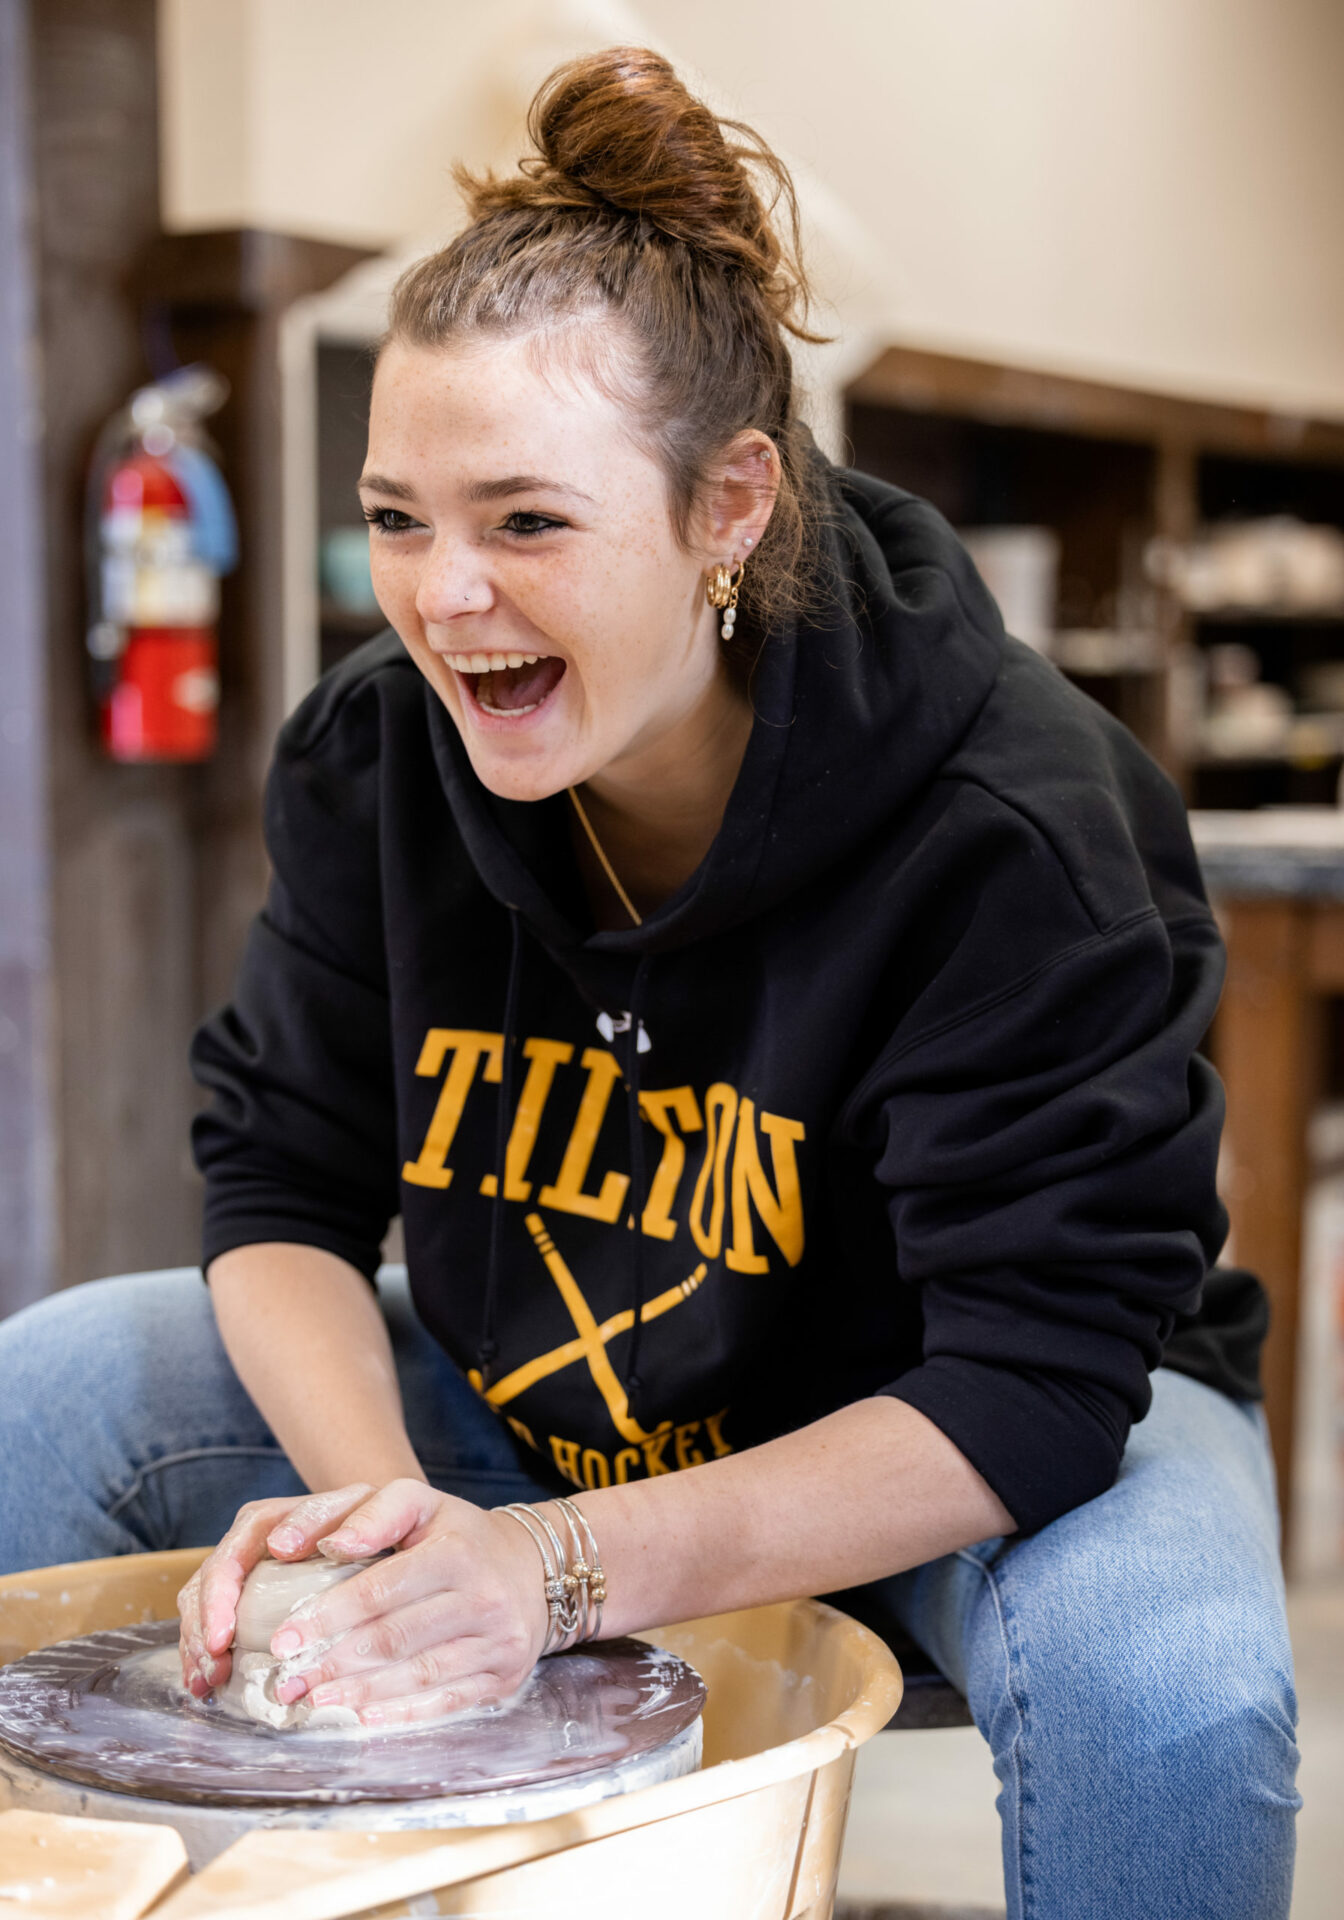 A student participates in a ceramics class as part of Tilton's New Hampshire Boarding School academic program.